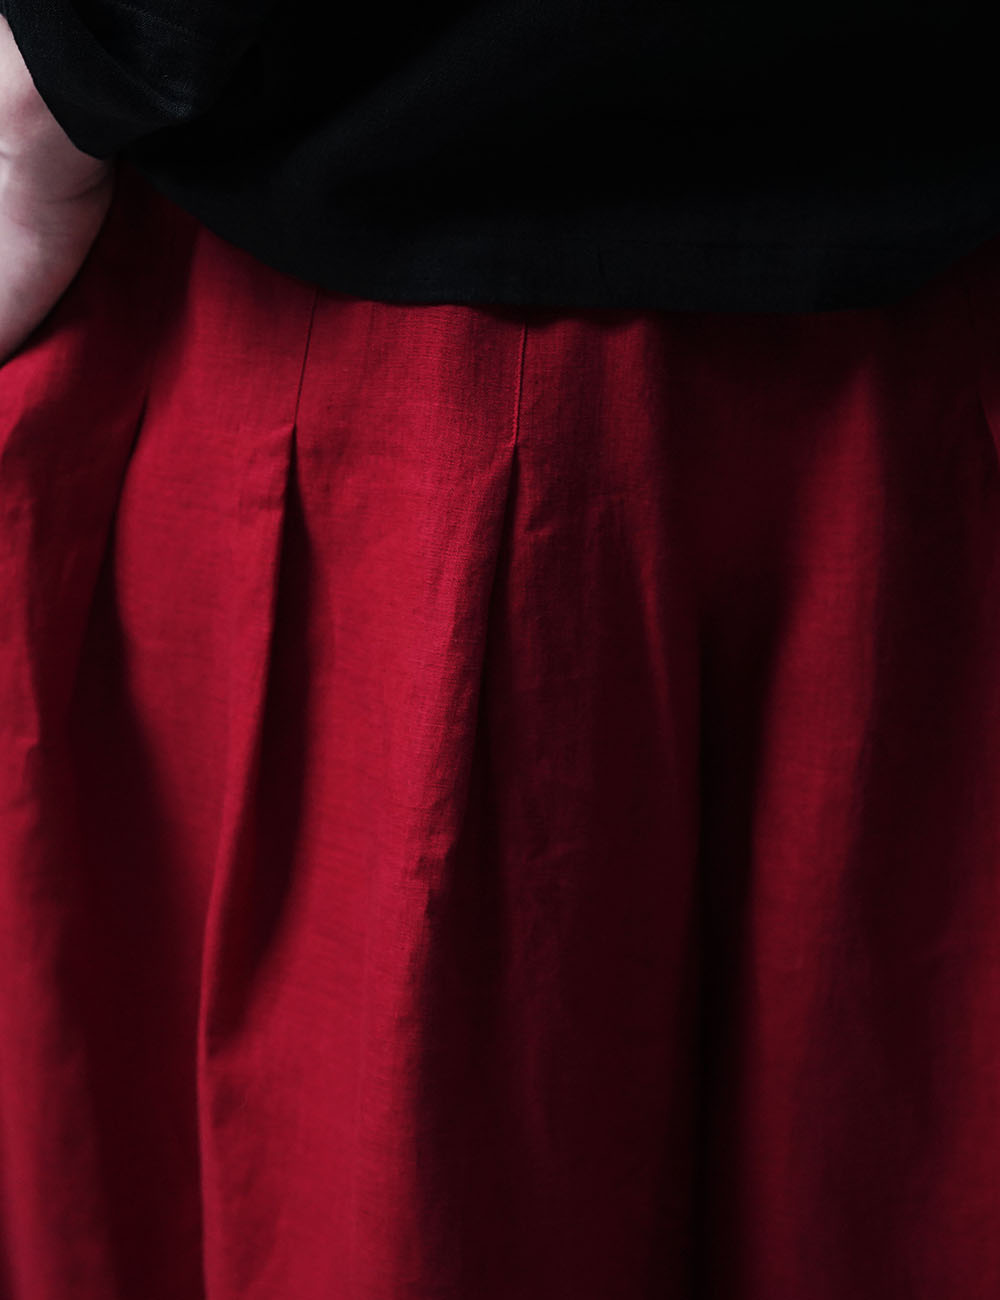 【wafu】Linen Pants 袴(はかま)パンツ/赤紅 b002k-akb1